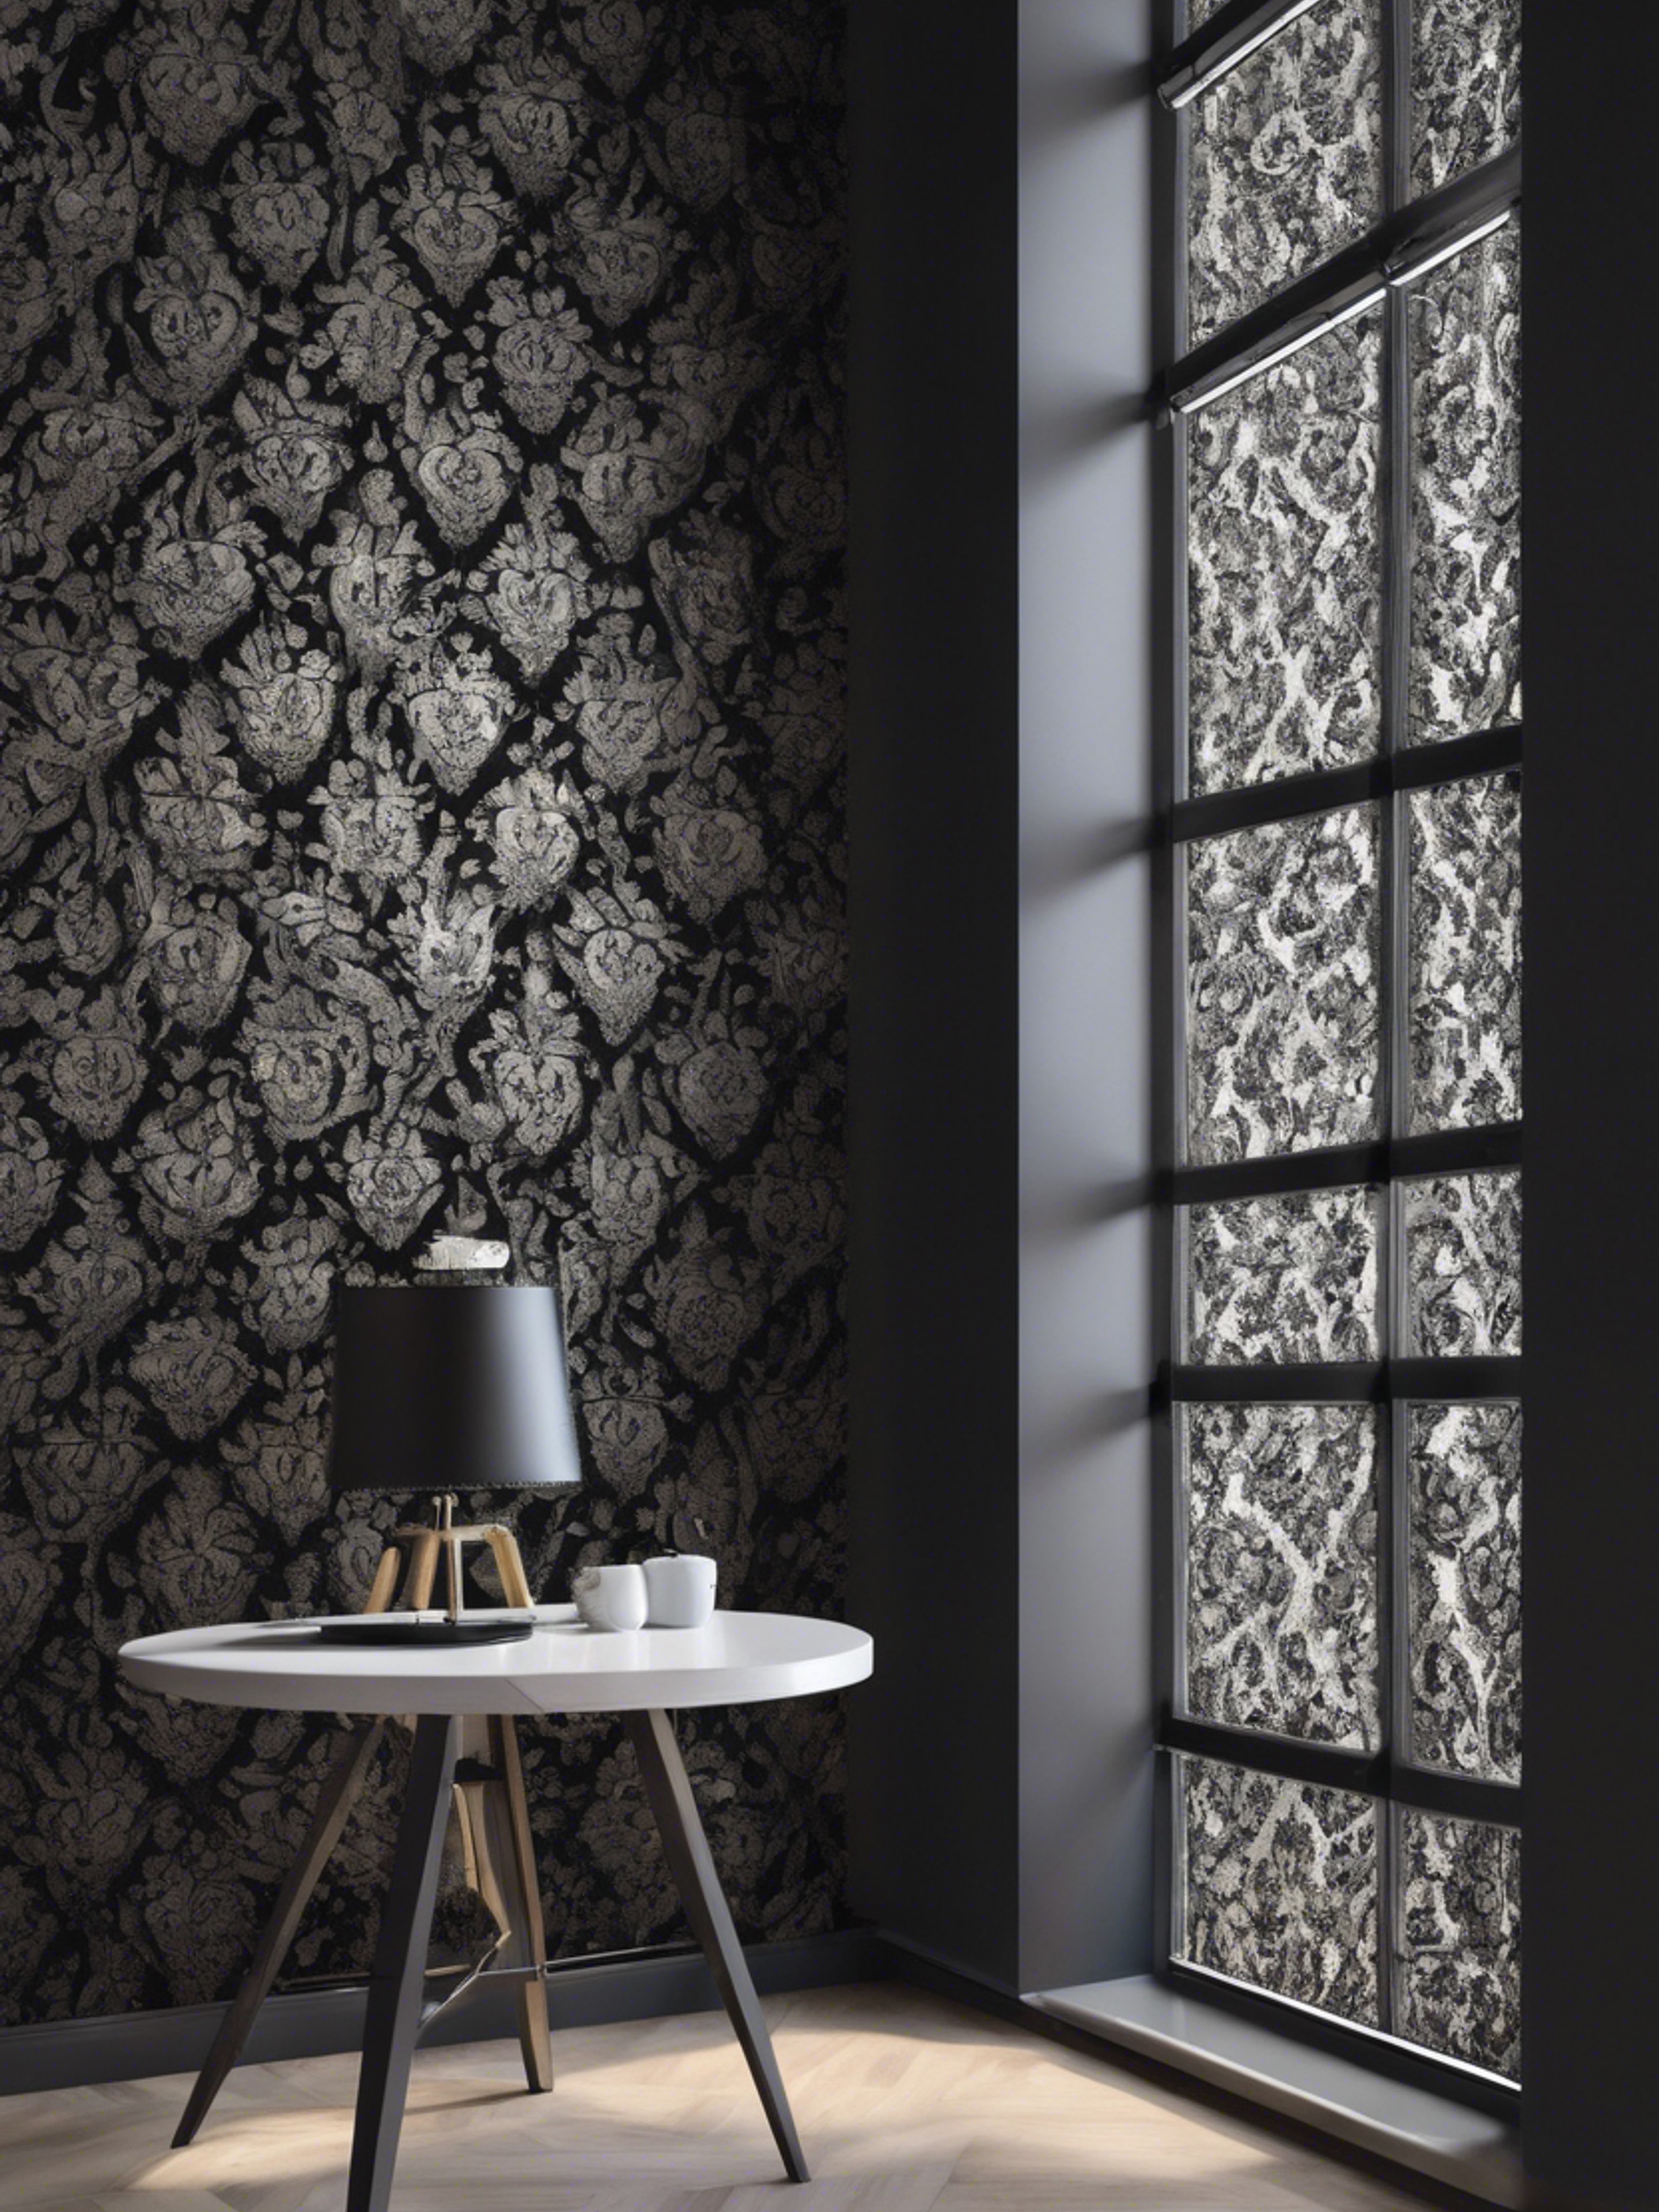 A black damask wallpaper accent wall in a modern loft space. Wallpaper[f7518270285b49a98e44]